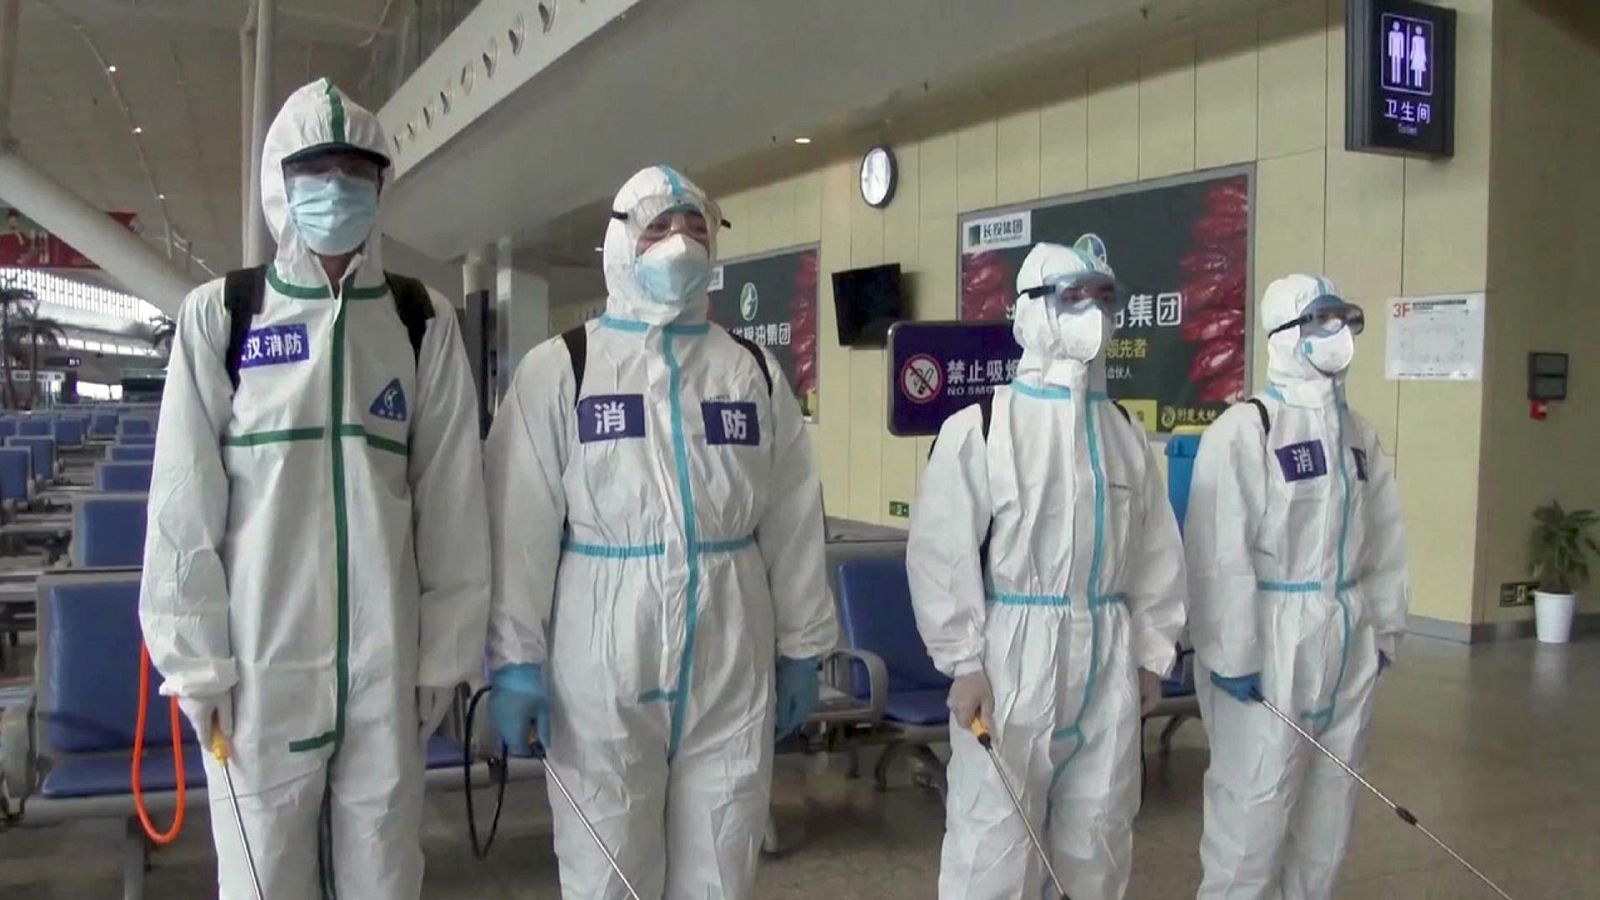 Somos documentales - Tras la pista del virus que hizo temblar al mundo - Documental en RTVE